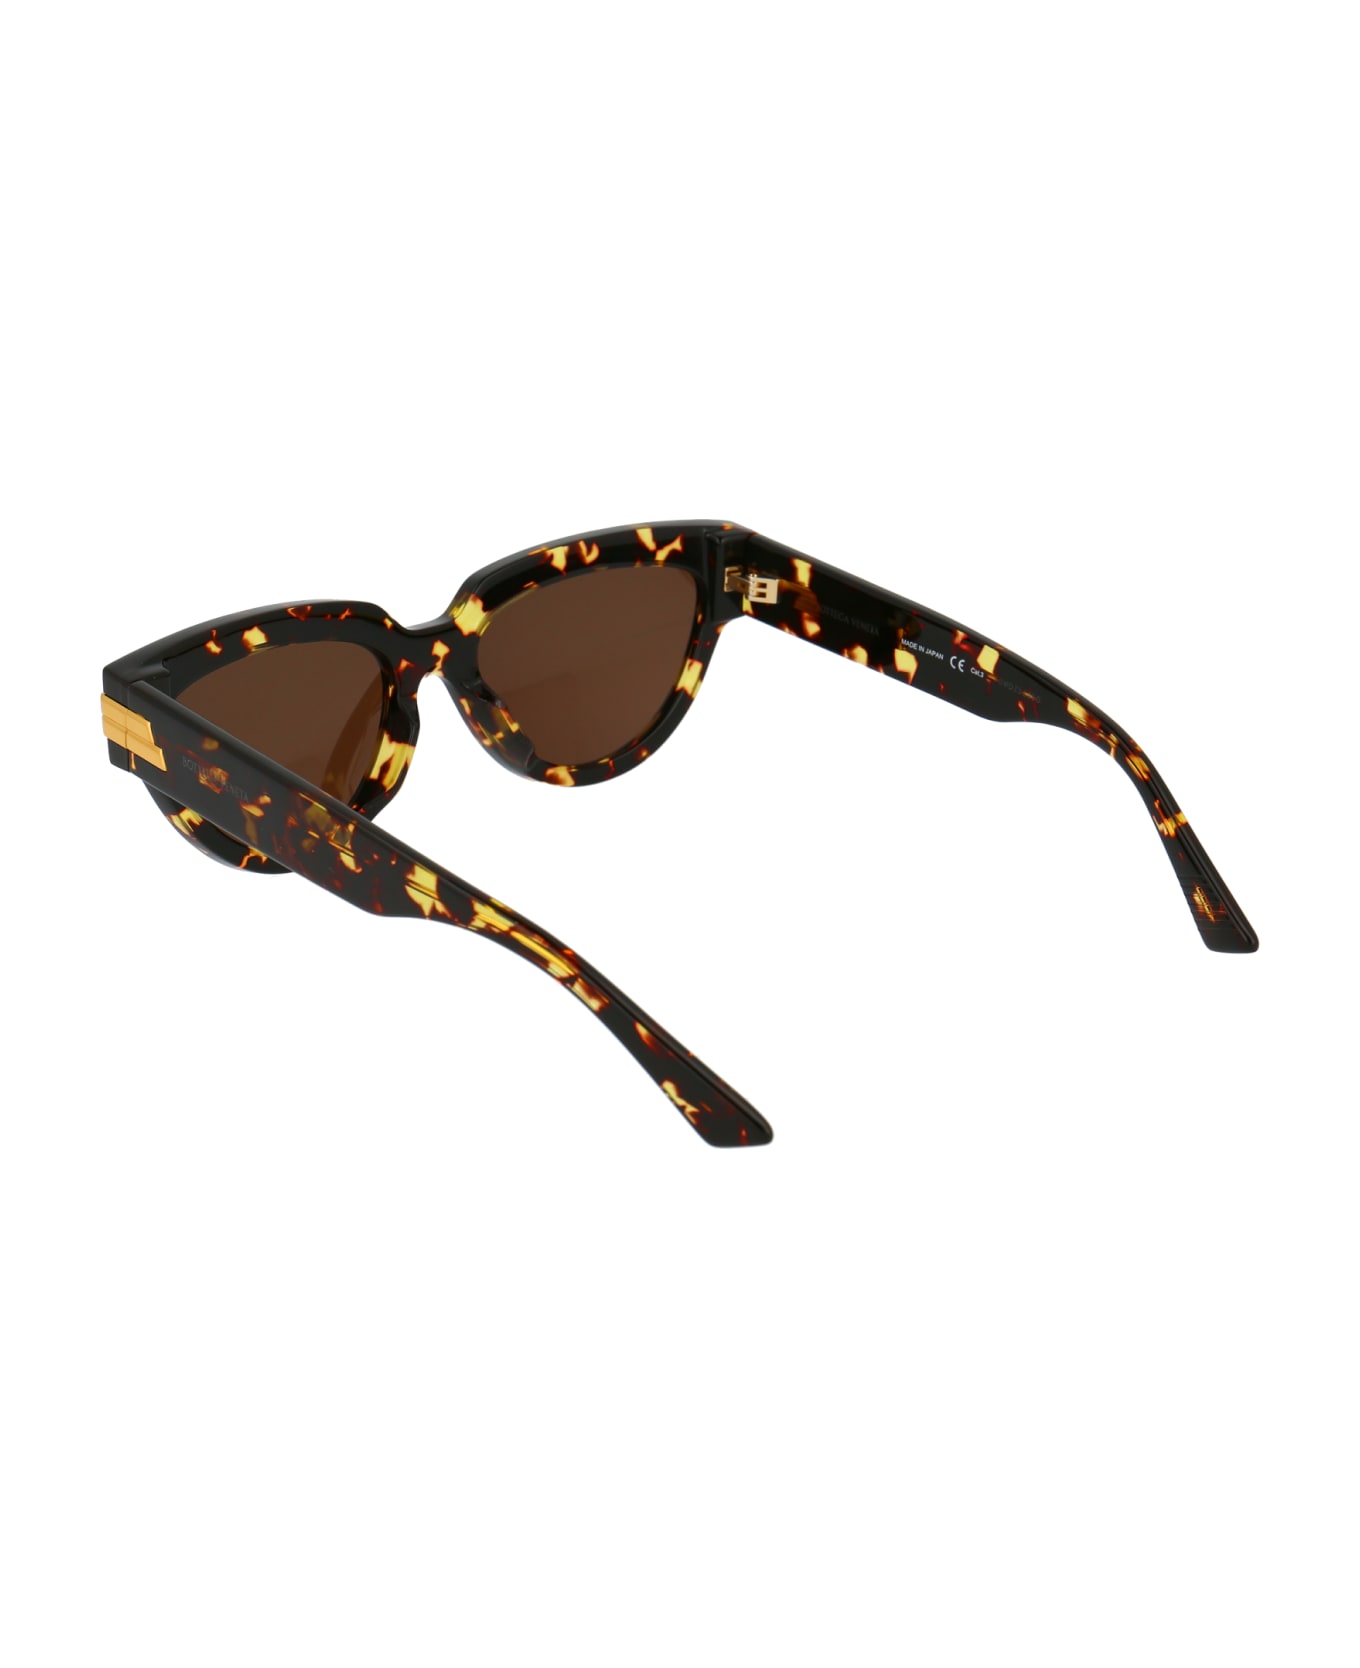 Bottega Veneta Eyewear Bv1035s Sunglasses - 002 HAVANA HAVANA BROWN サングラス